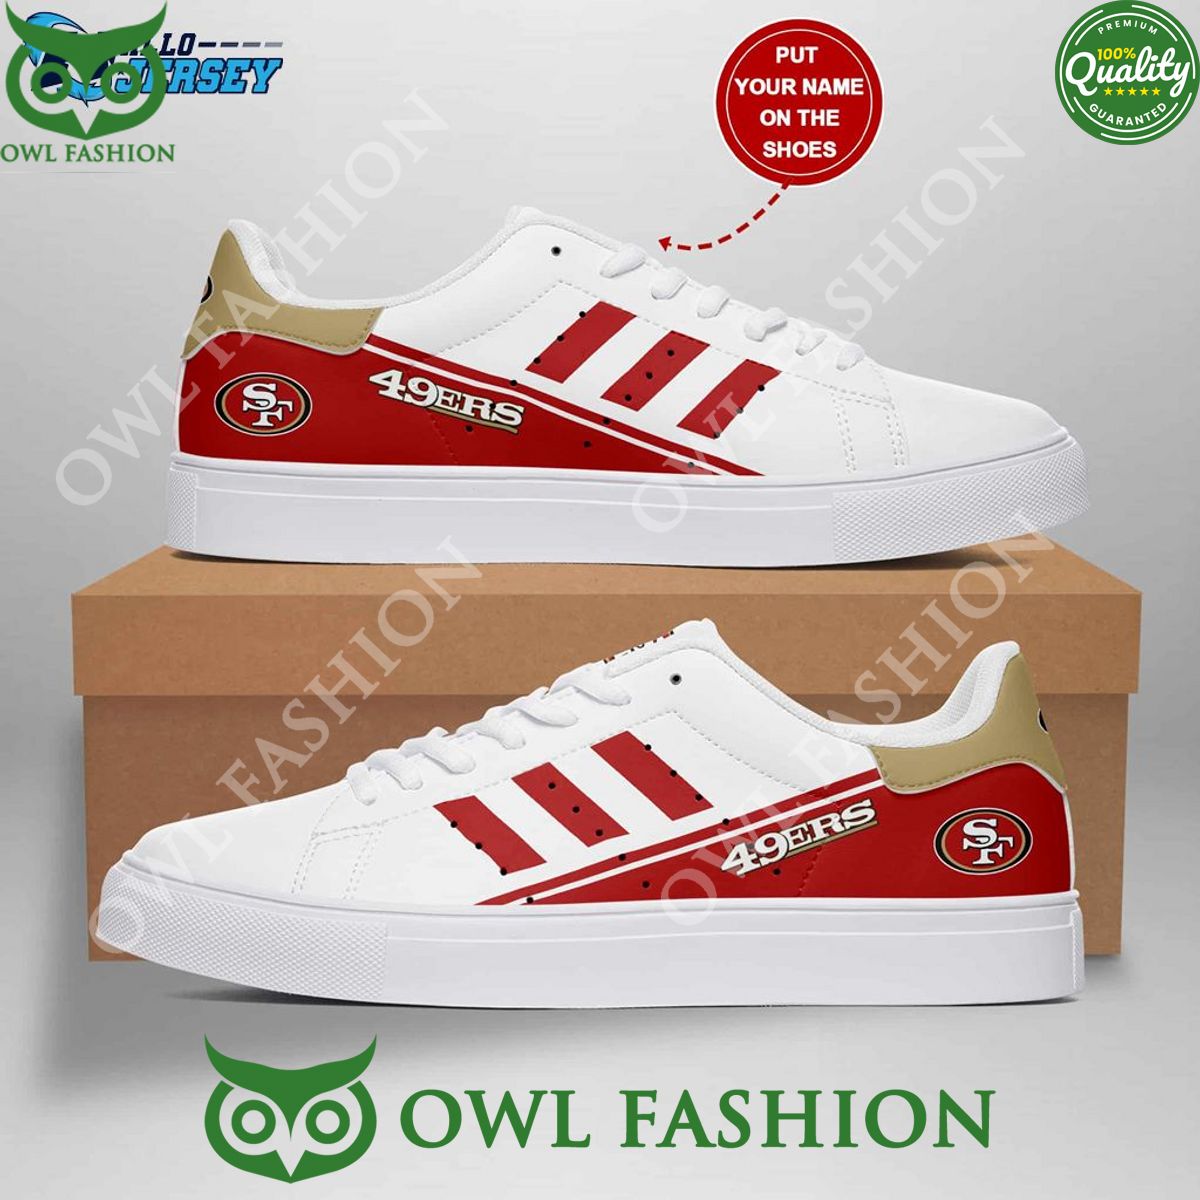 San Francisco 49ers Custom Football Team Gift Stan Smith Nfl Sneakers